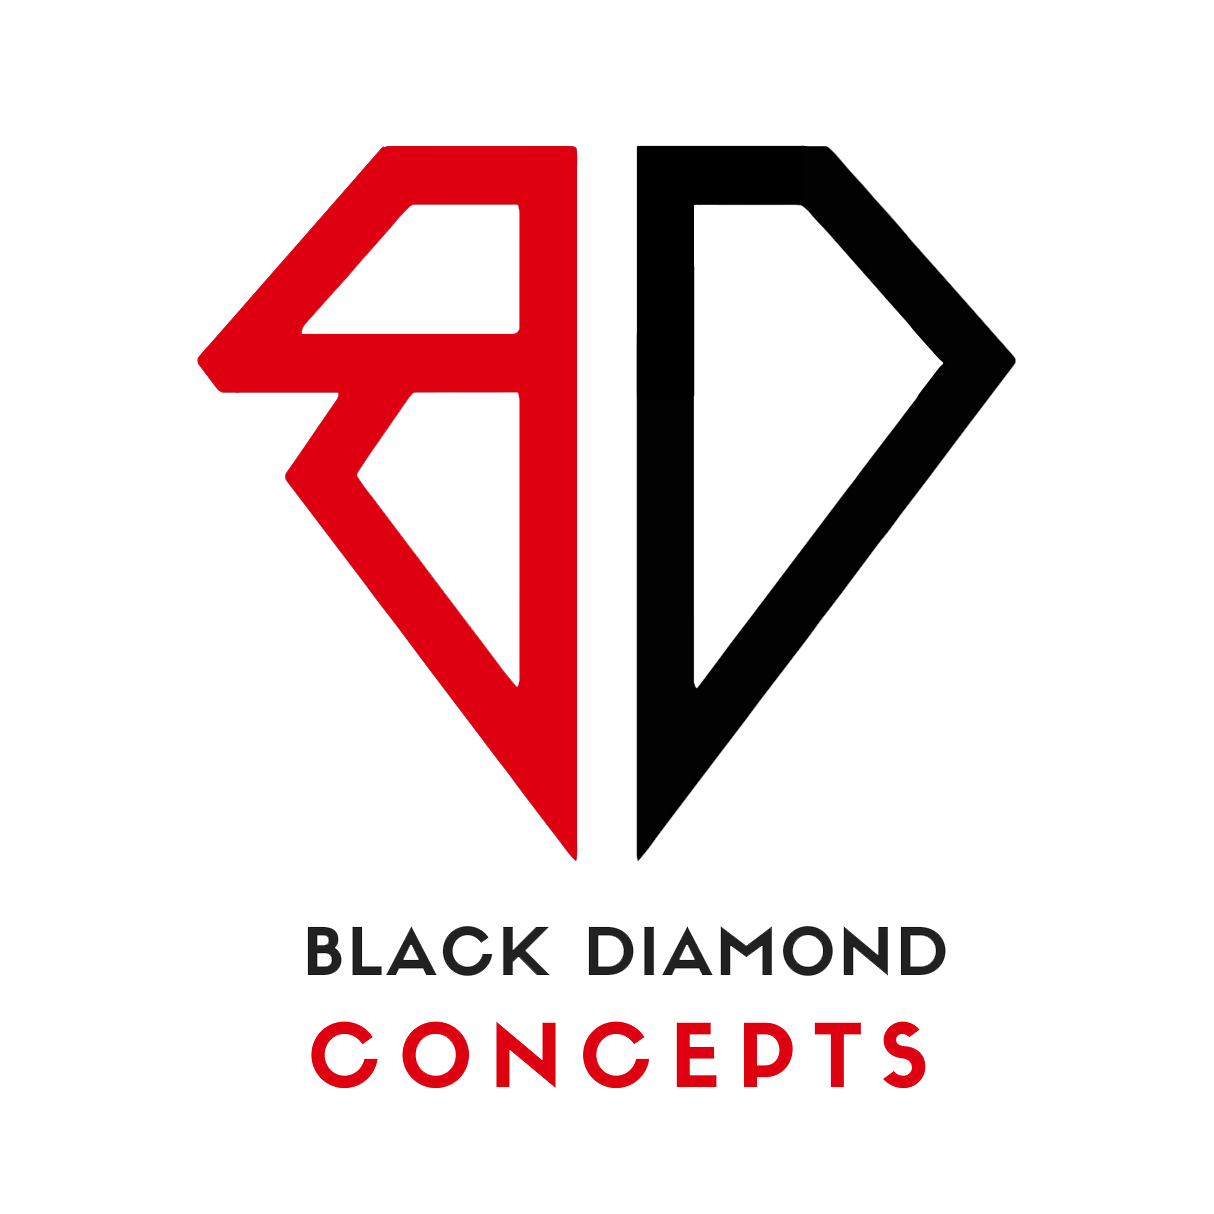 Black Diamonds Logo - Home - Black Diamond Concepts